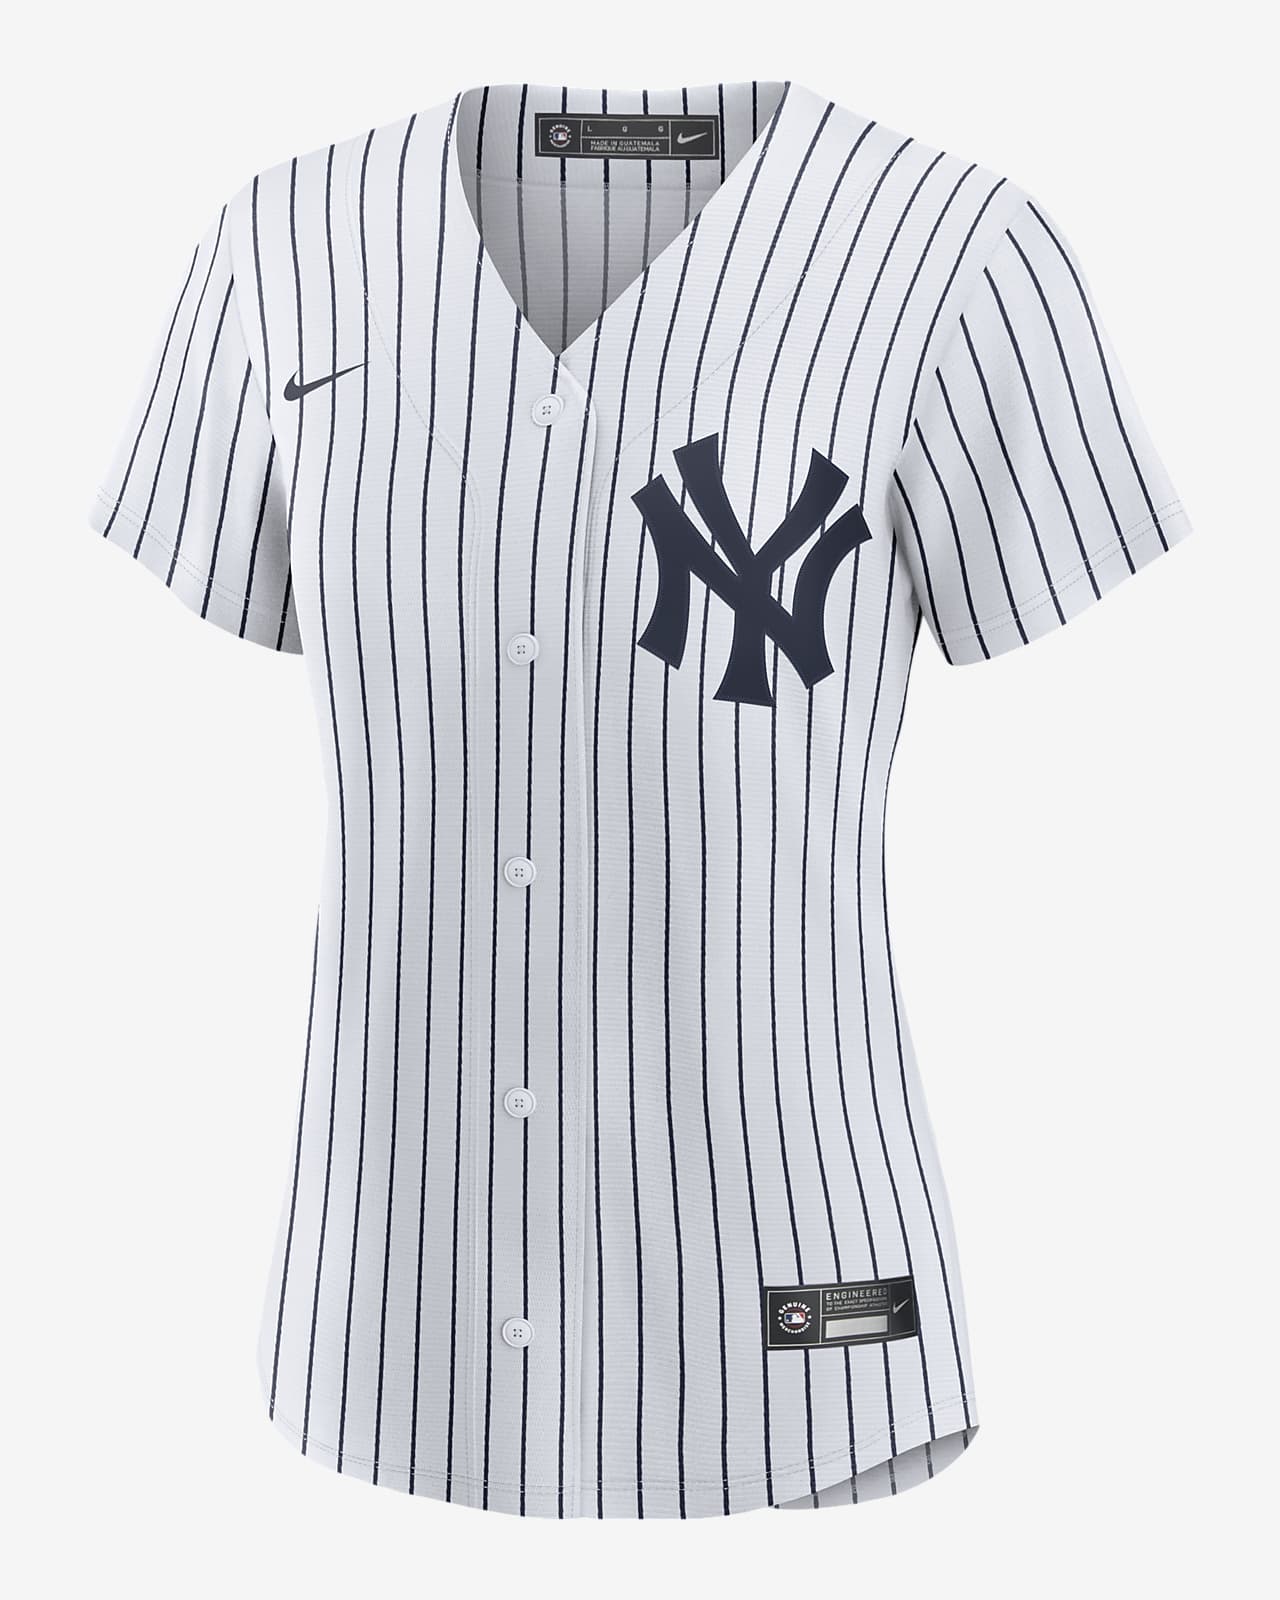 Juan Soto New York Yankees Women's Nike MLB Replica Jersey